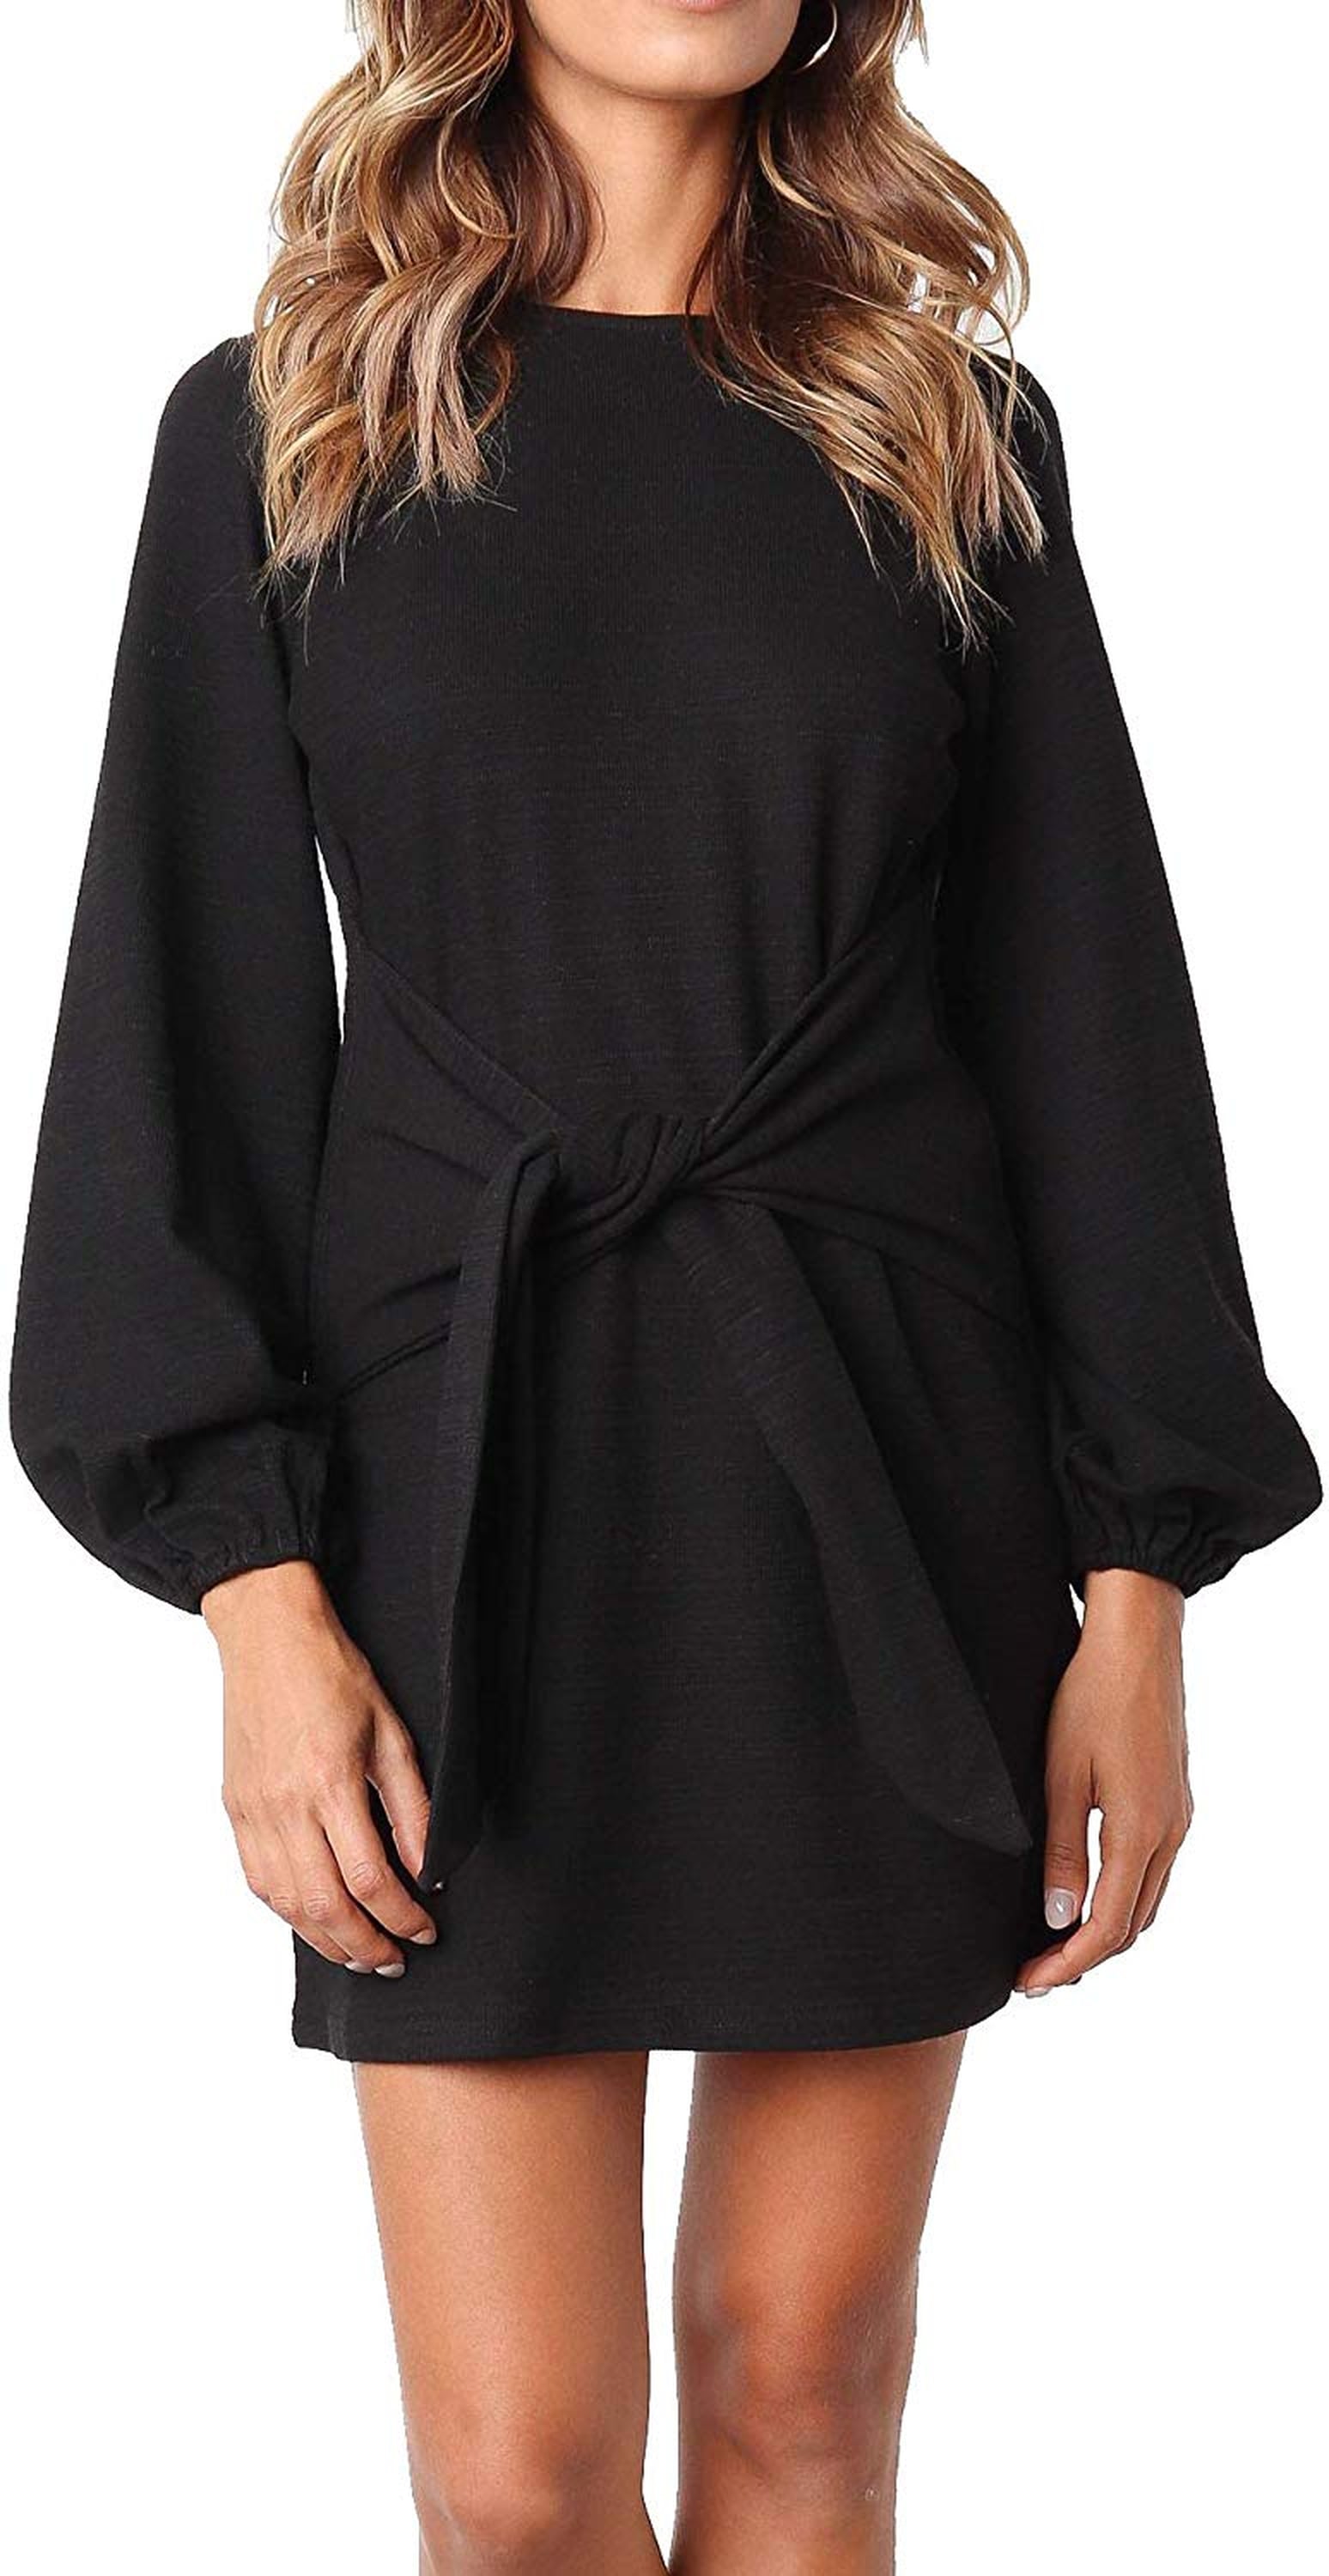 Bestselling Sweater Dress on Amazon Fashion | POPSUGAR Fashion